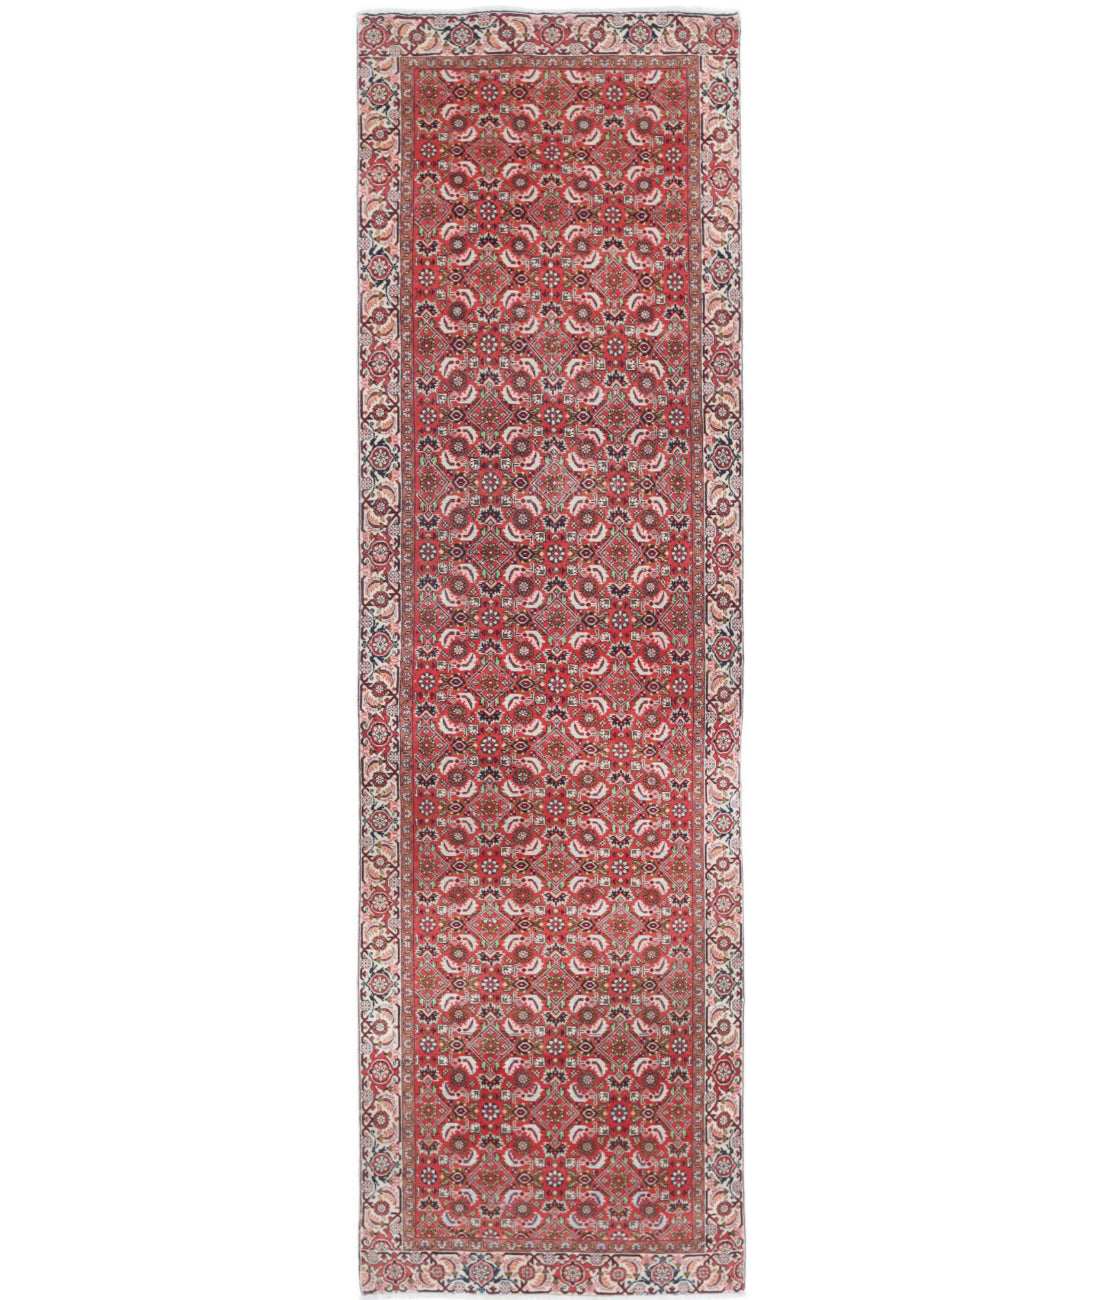 Hand Knotted Persian Bijar Wool Rug - 2'6'' x 9'2'' 2'6'' x 9'2'' (75 X 275) / Red / Ivory